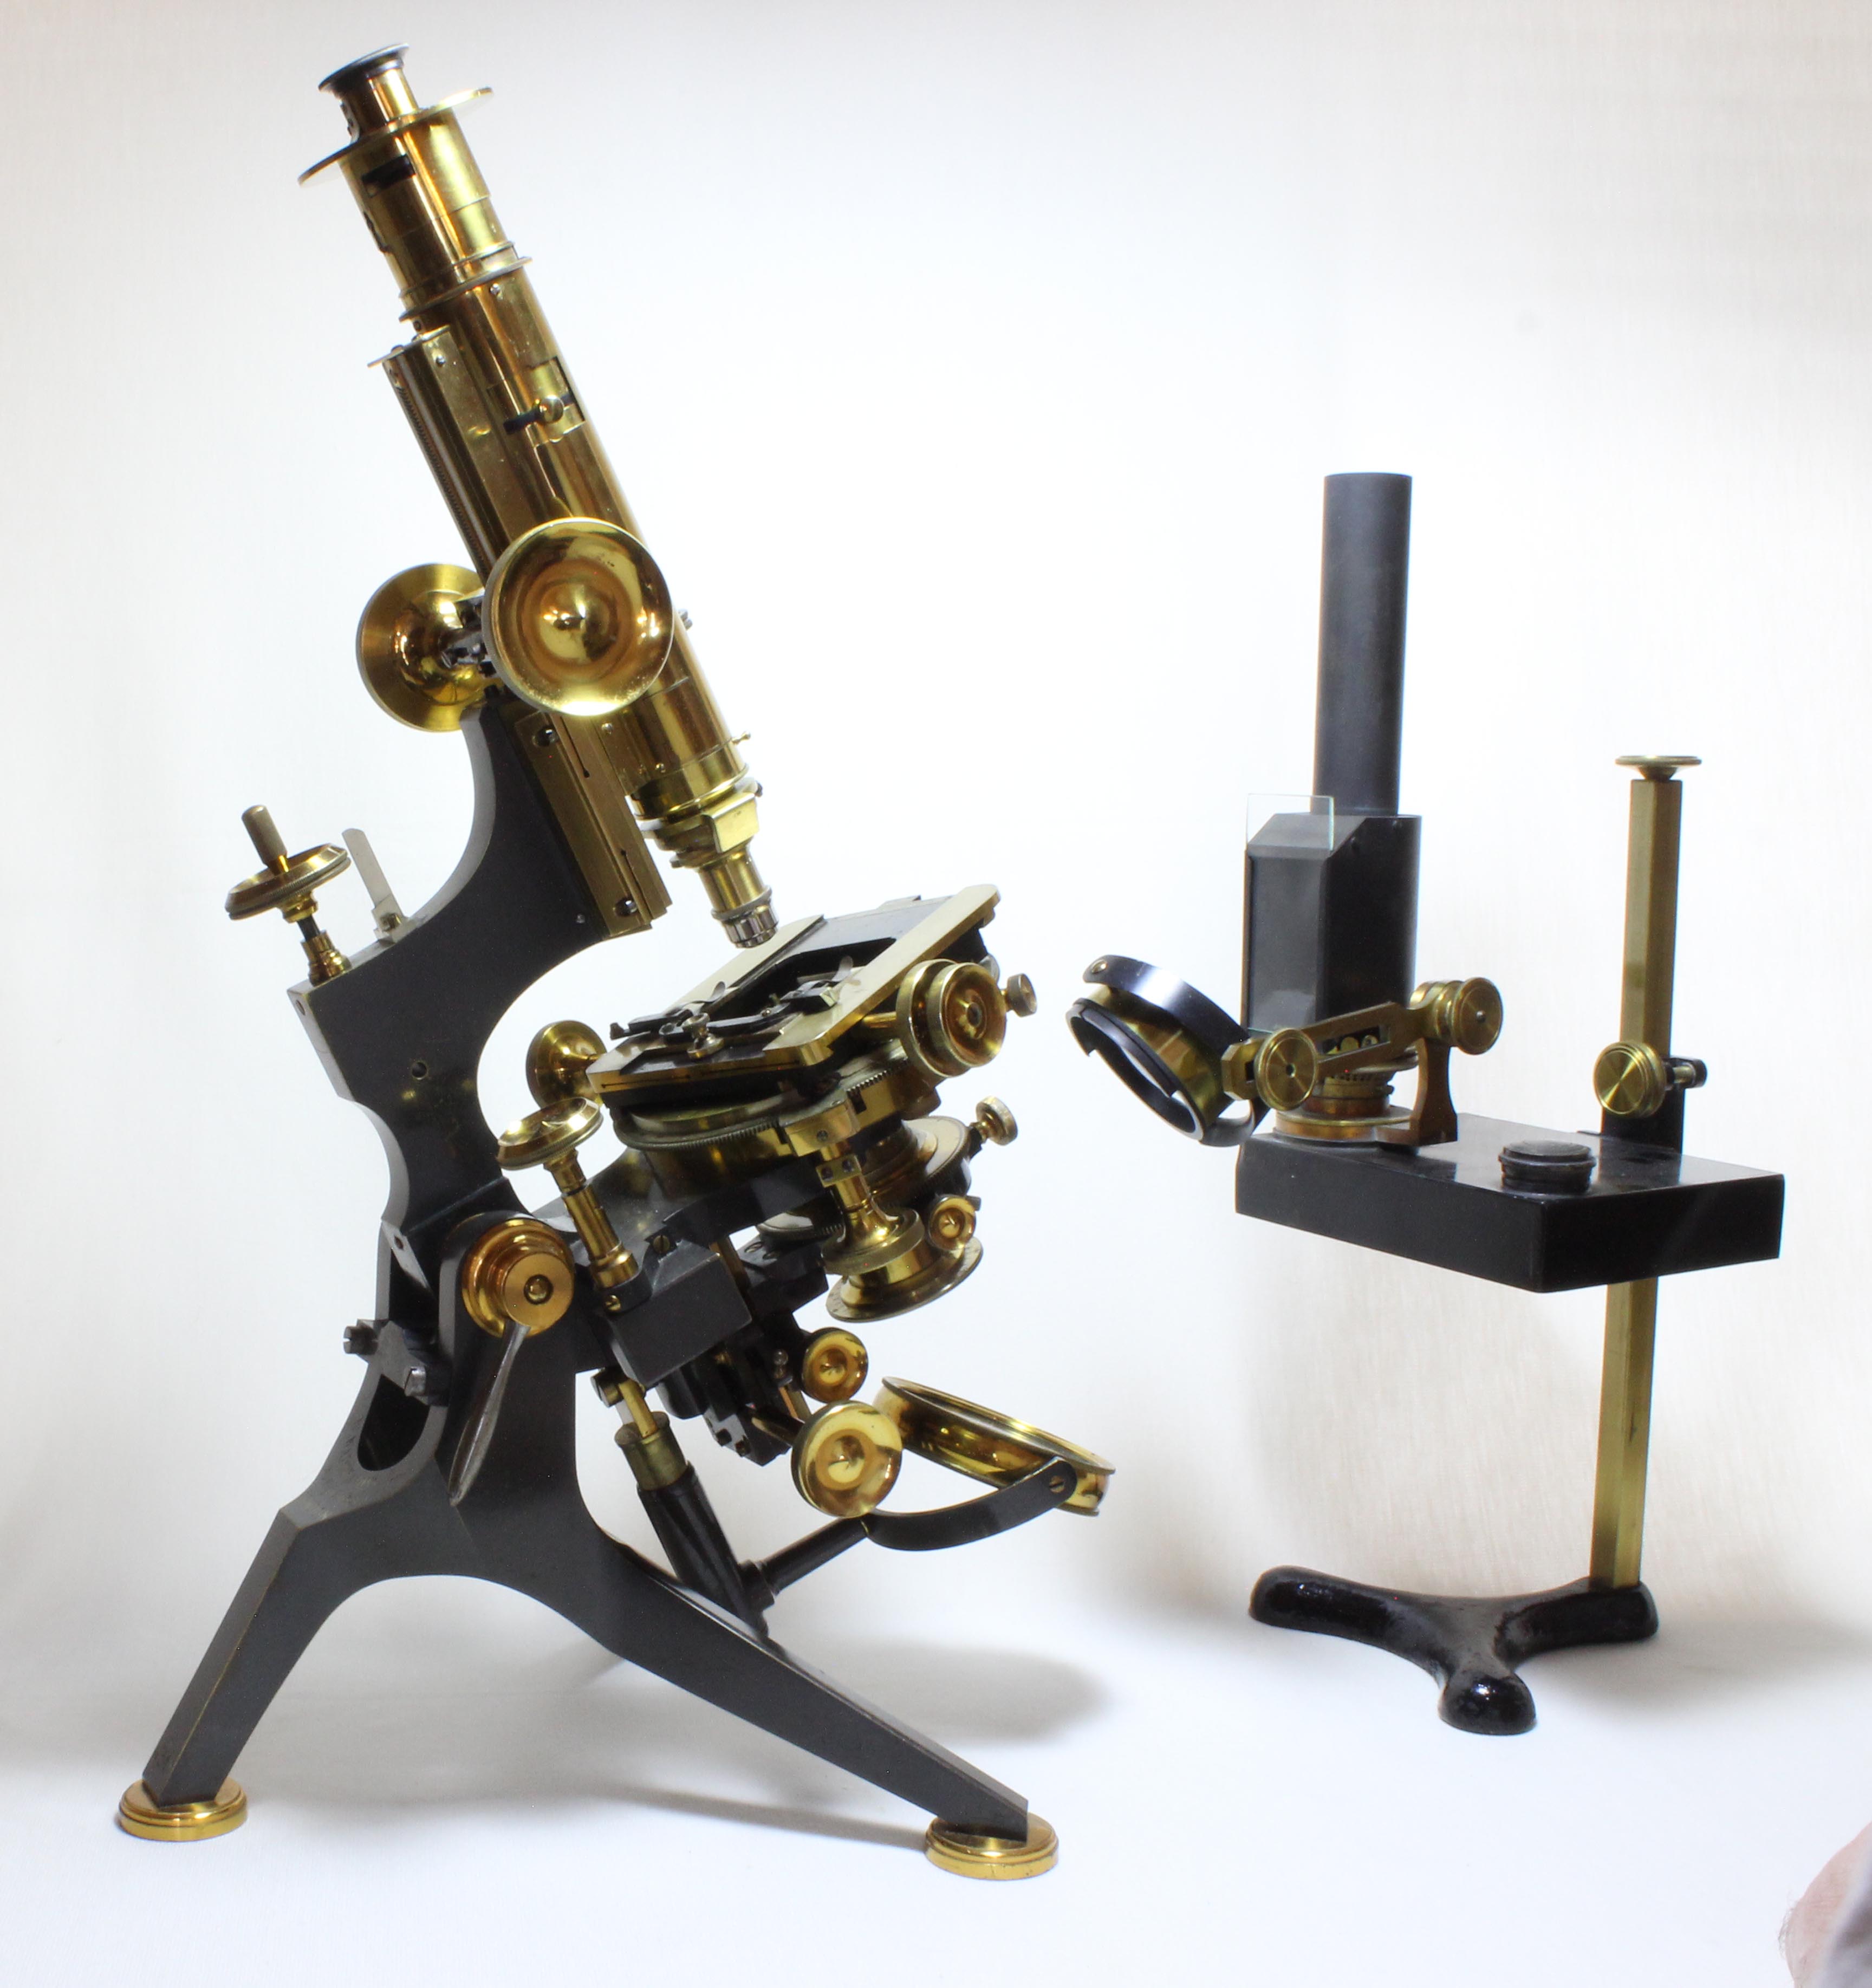 oil lamp for microscope